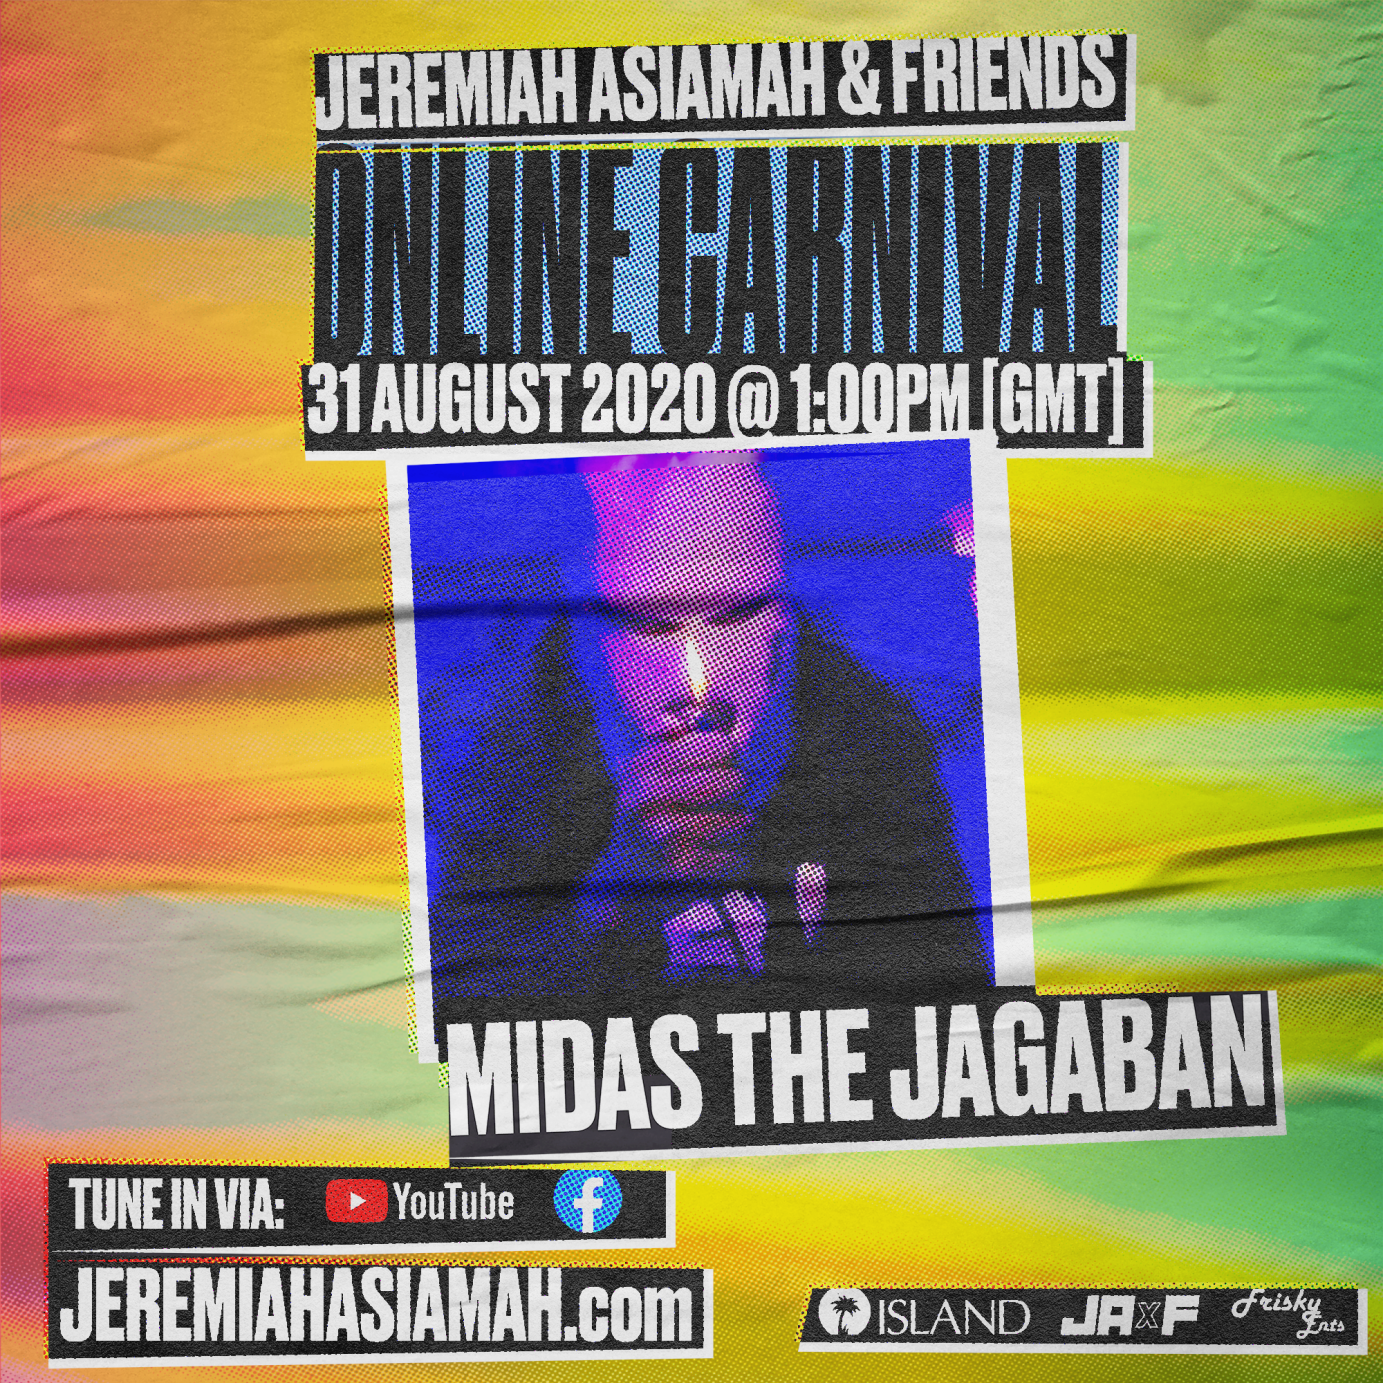 Jeremiah Asiamah & Friends x Island Records x Notting Hill Carnival 2020